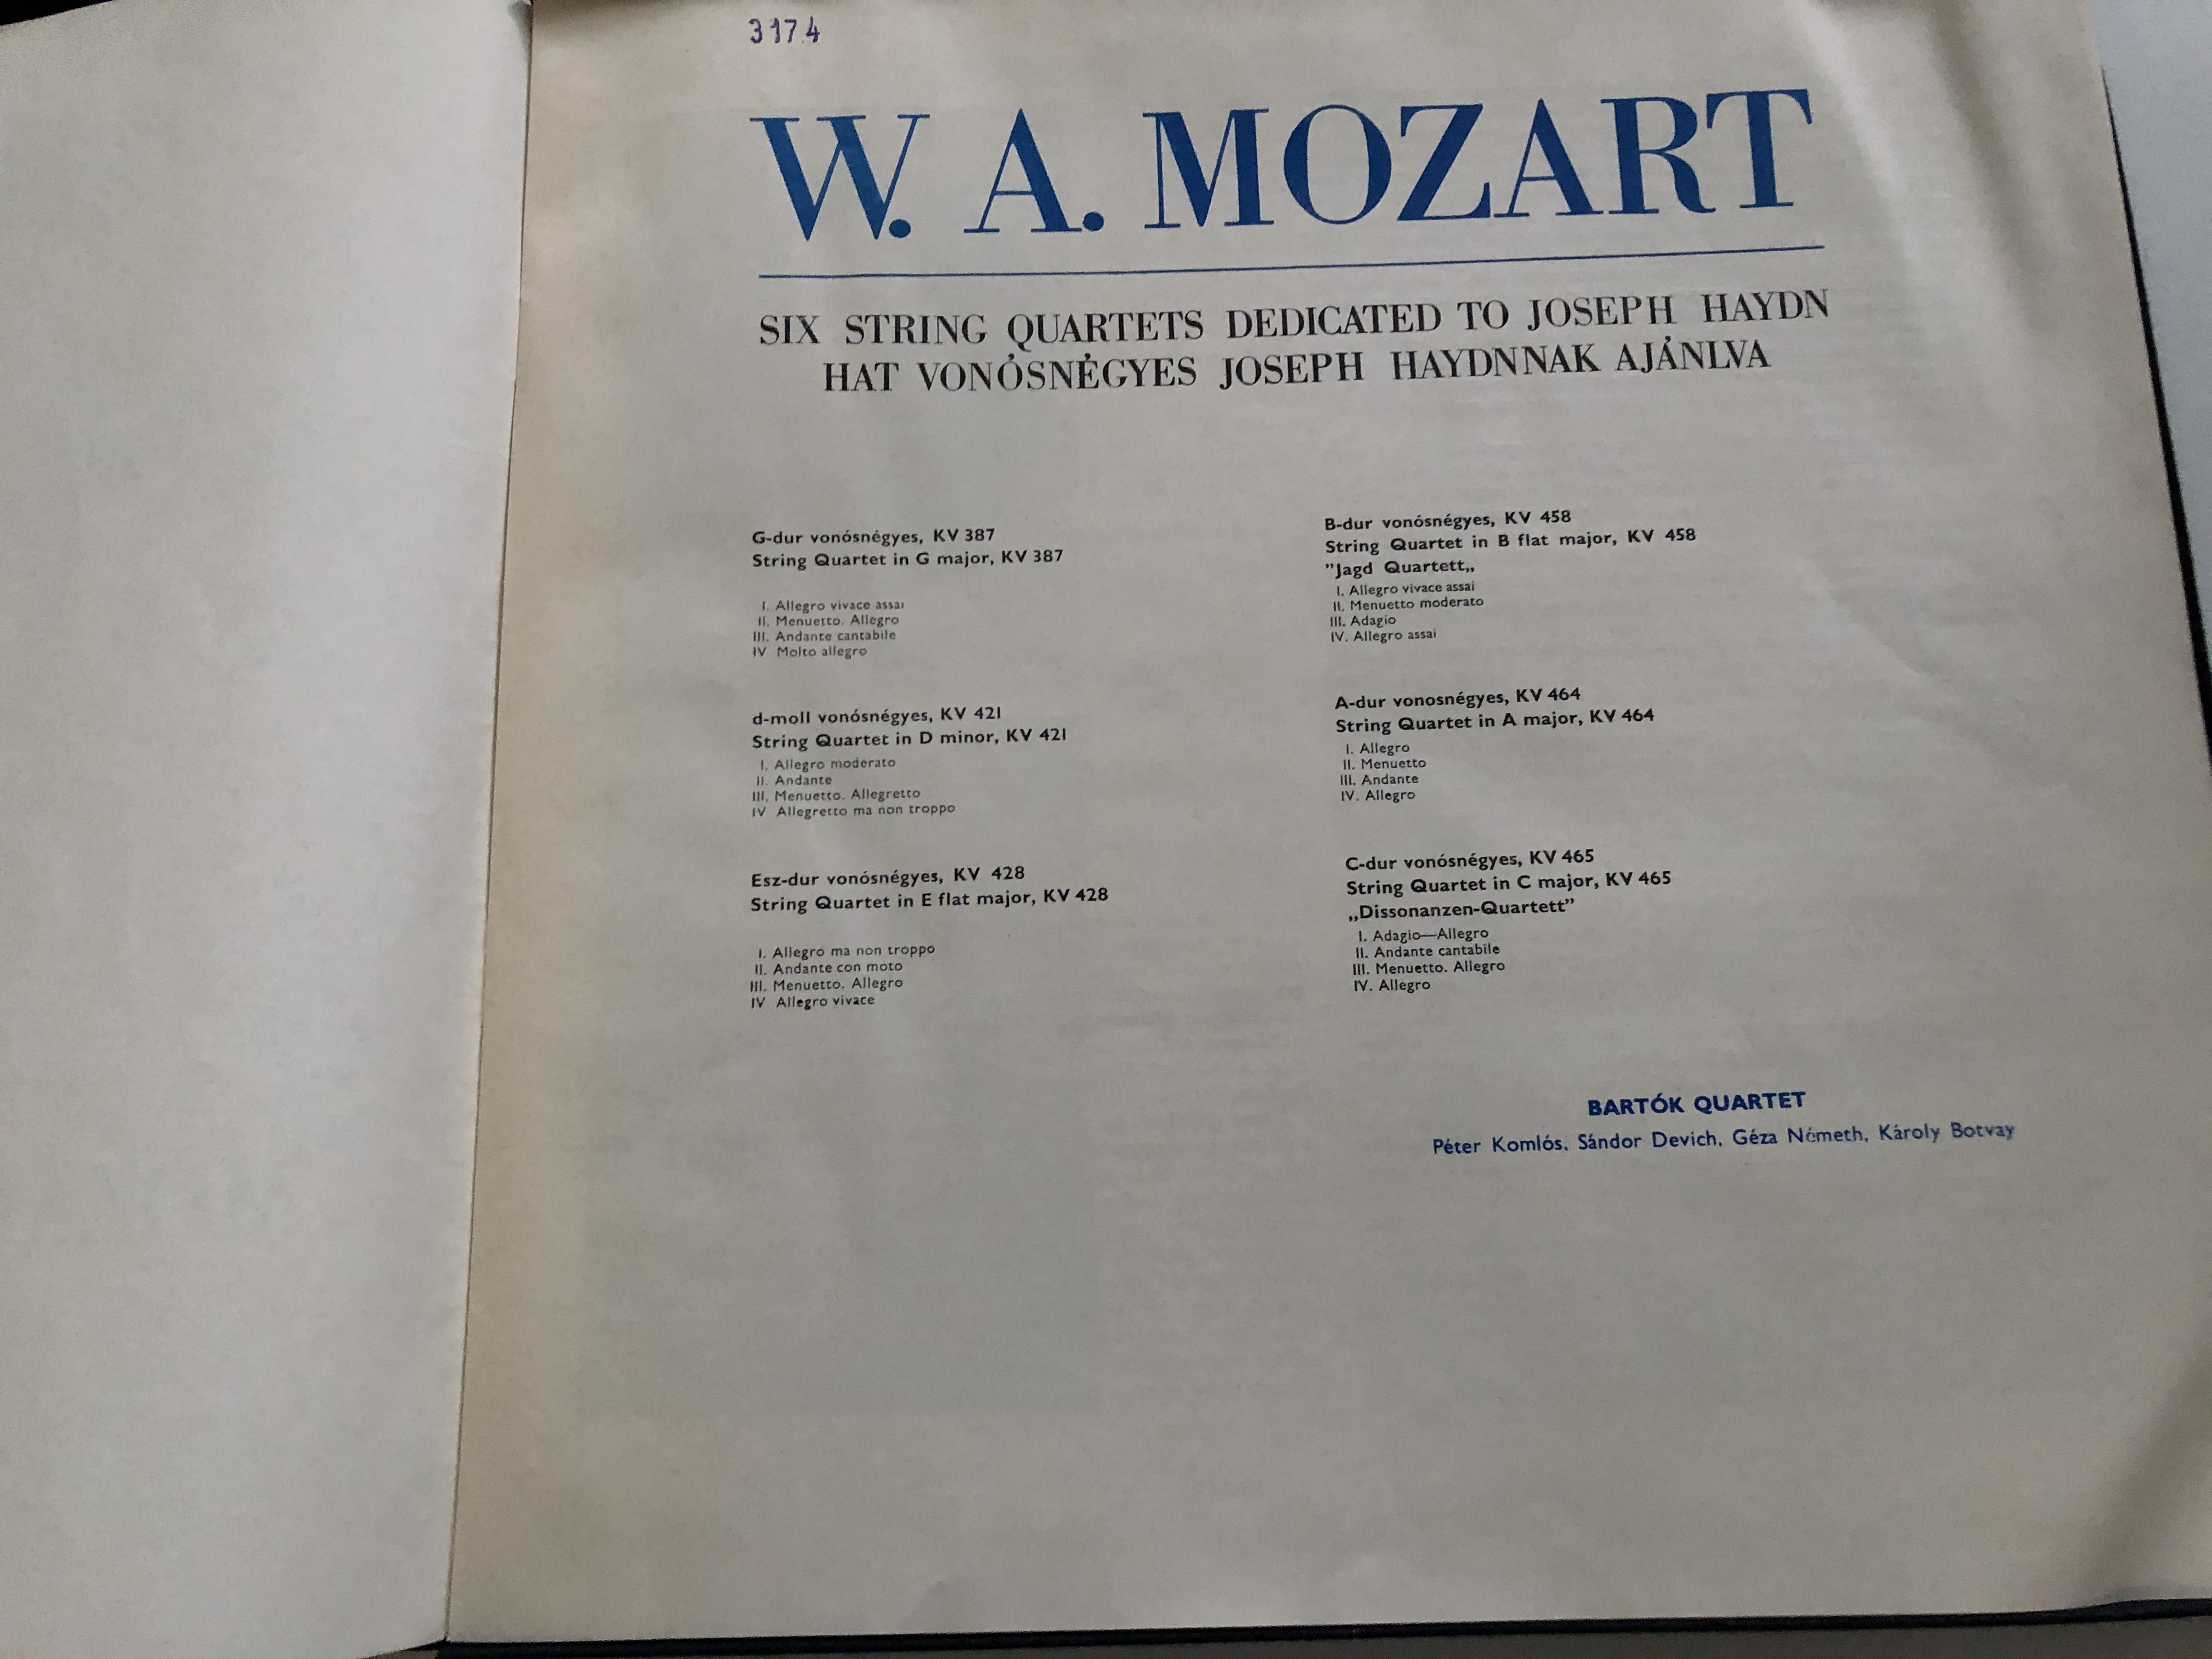 mozart-six-string-quartets-dedicated-to-joseph-haydn-bart-k-quartet-qualiton-3x-lp-stereo-lpx-11400-02-2-.jpg